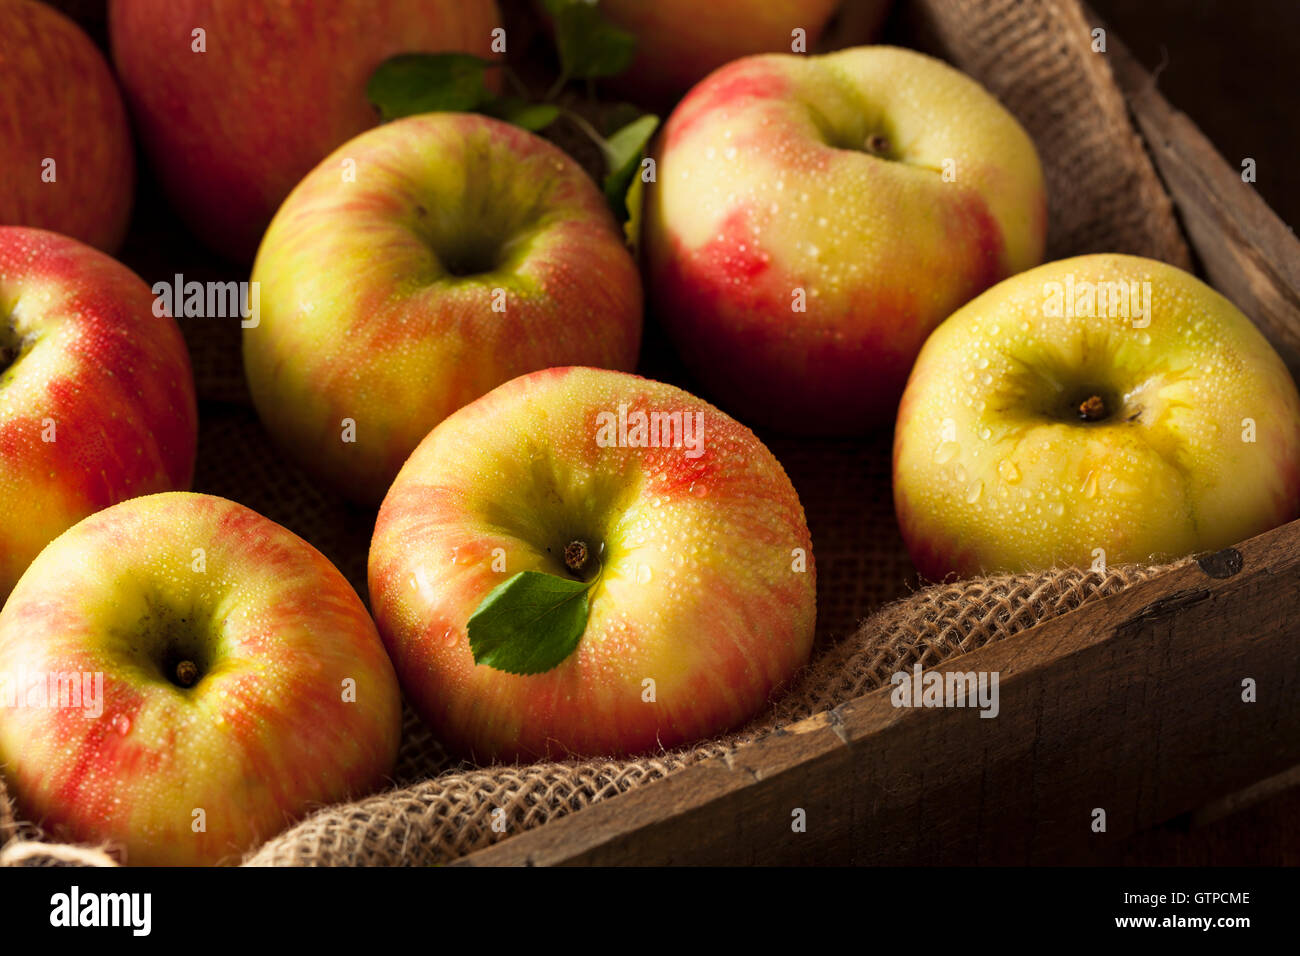 https://c8.alamy.com/comp/GTPCME/raw-organic-honeycrisp-apples-ready-to-eat-GTPCME.jpg